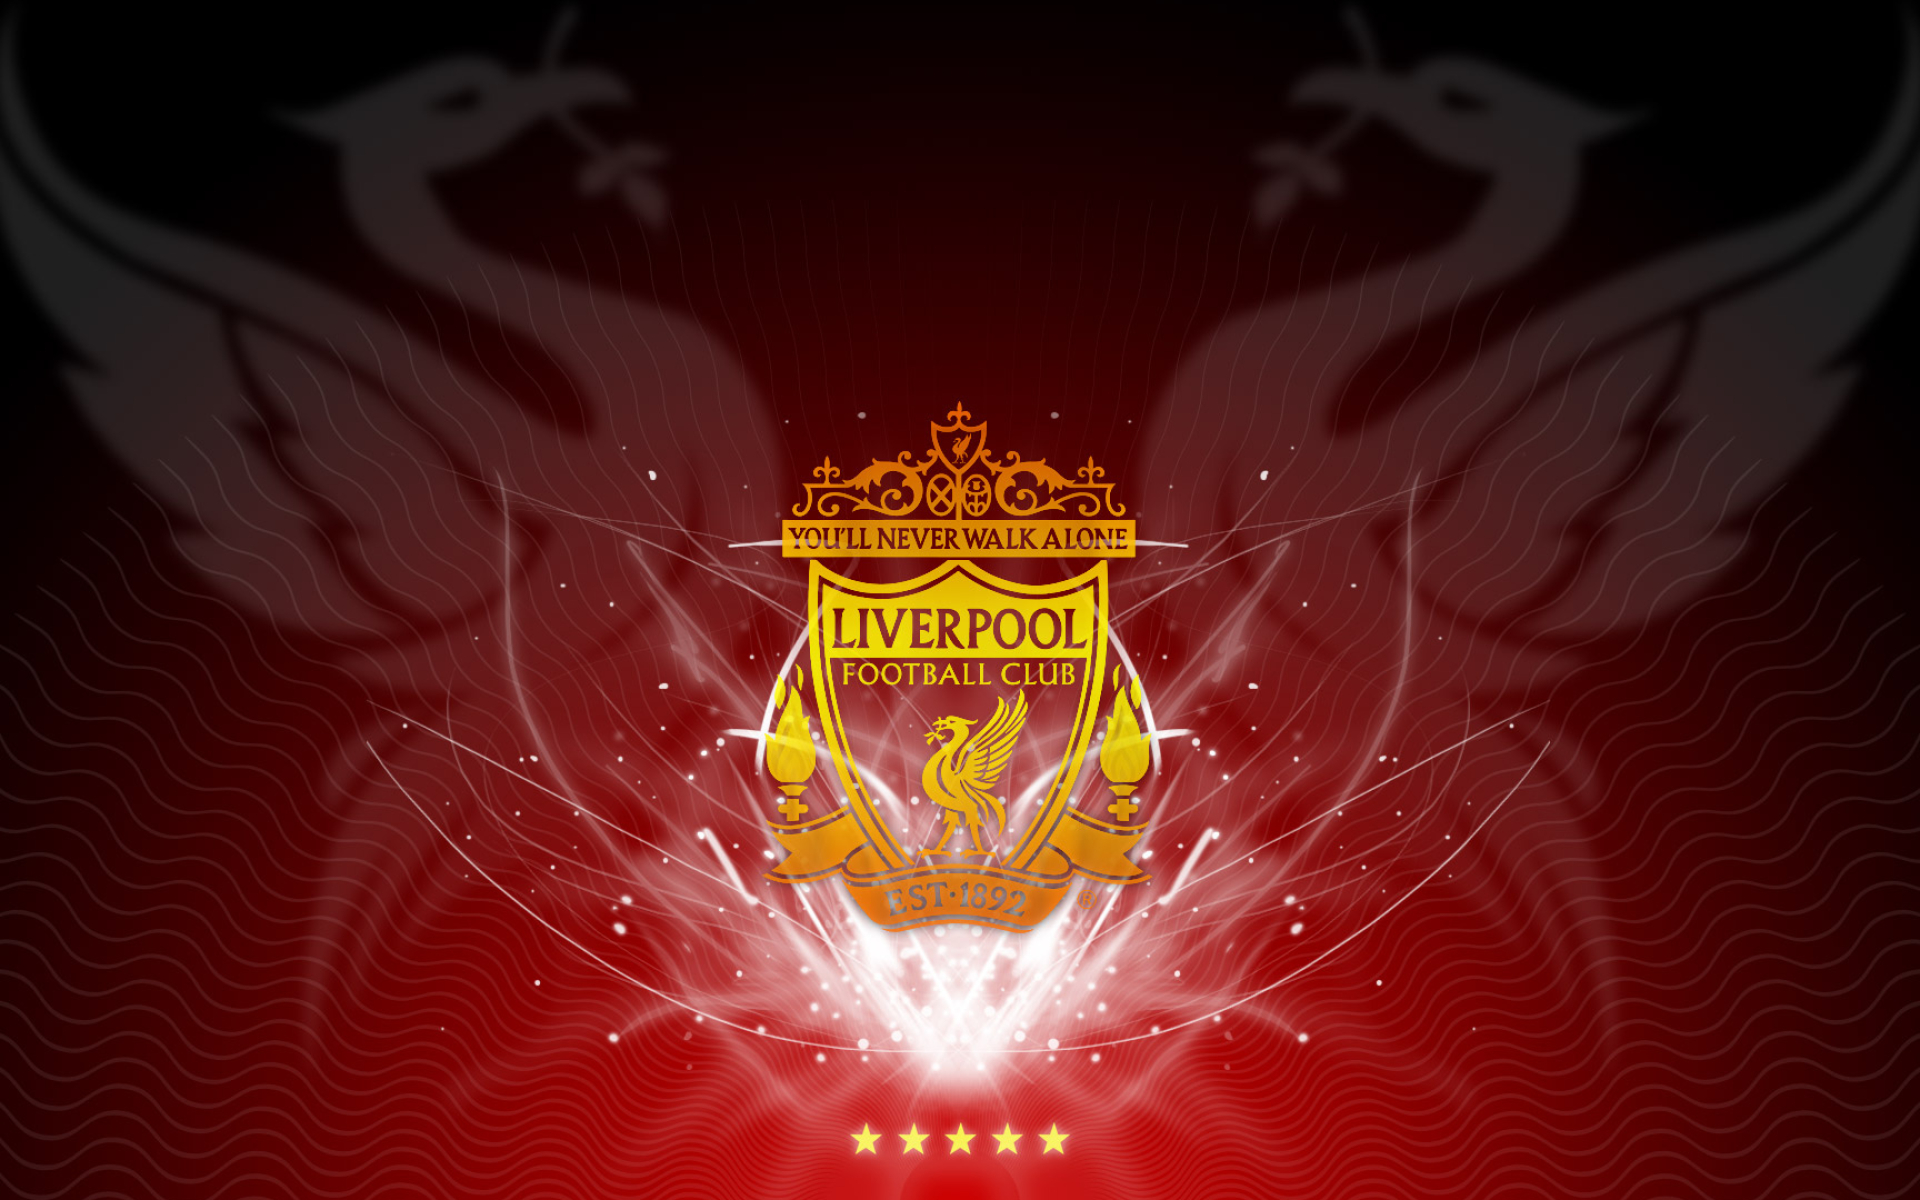 Liverpool Football Club: The most successful English team in European football tournament history. 1920x1200 HD Wallpaper.